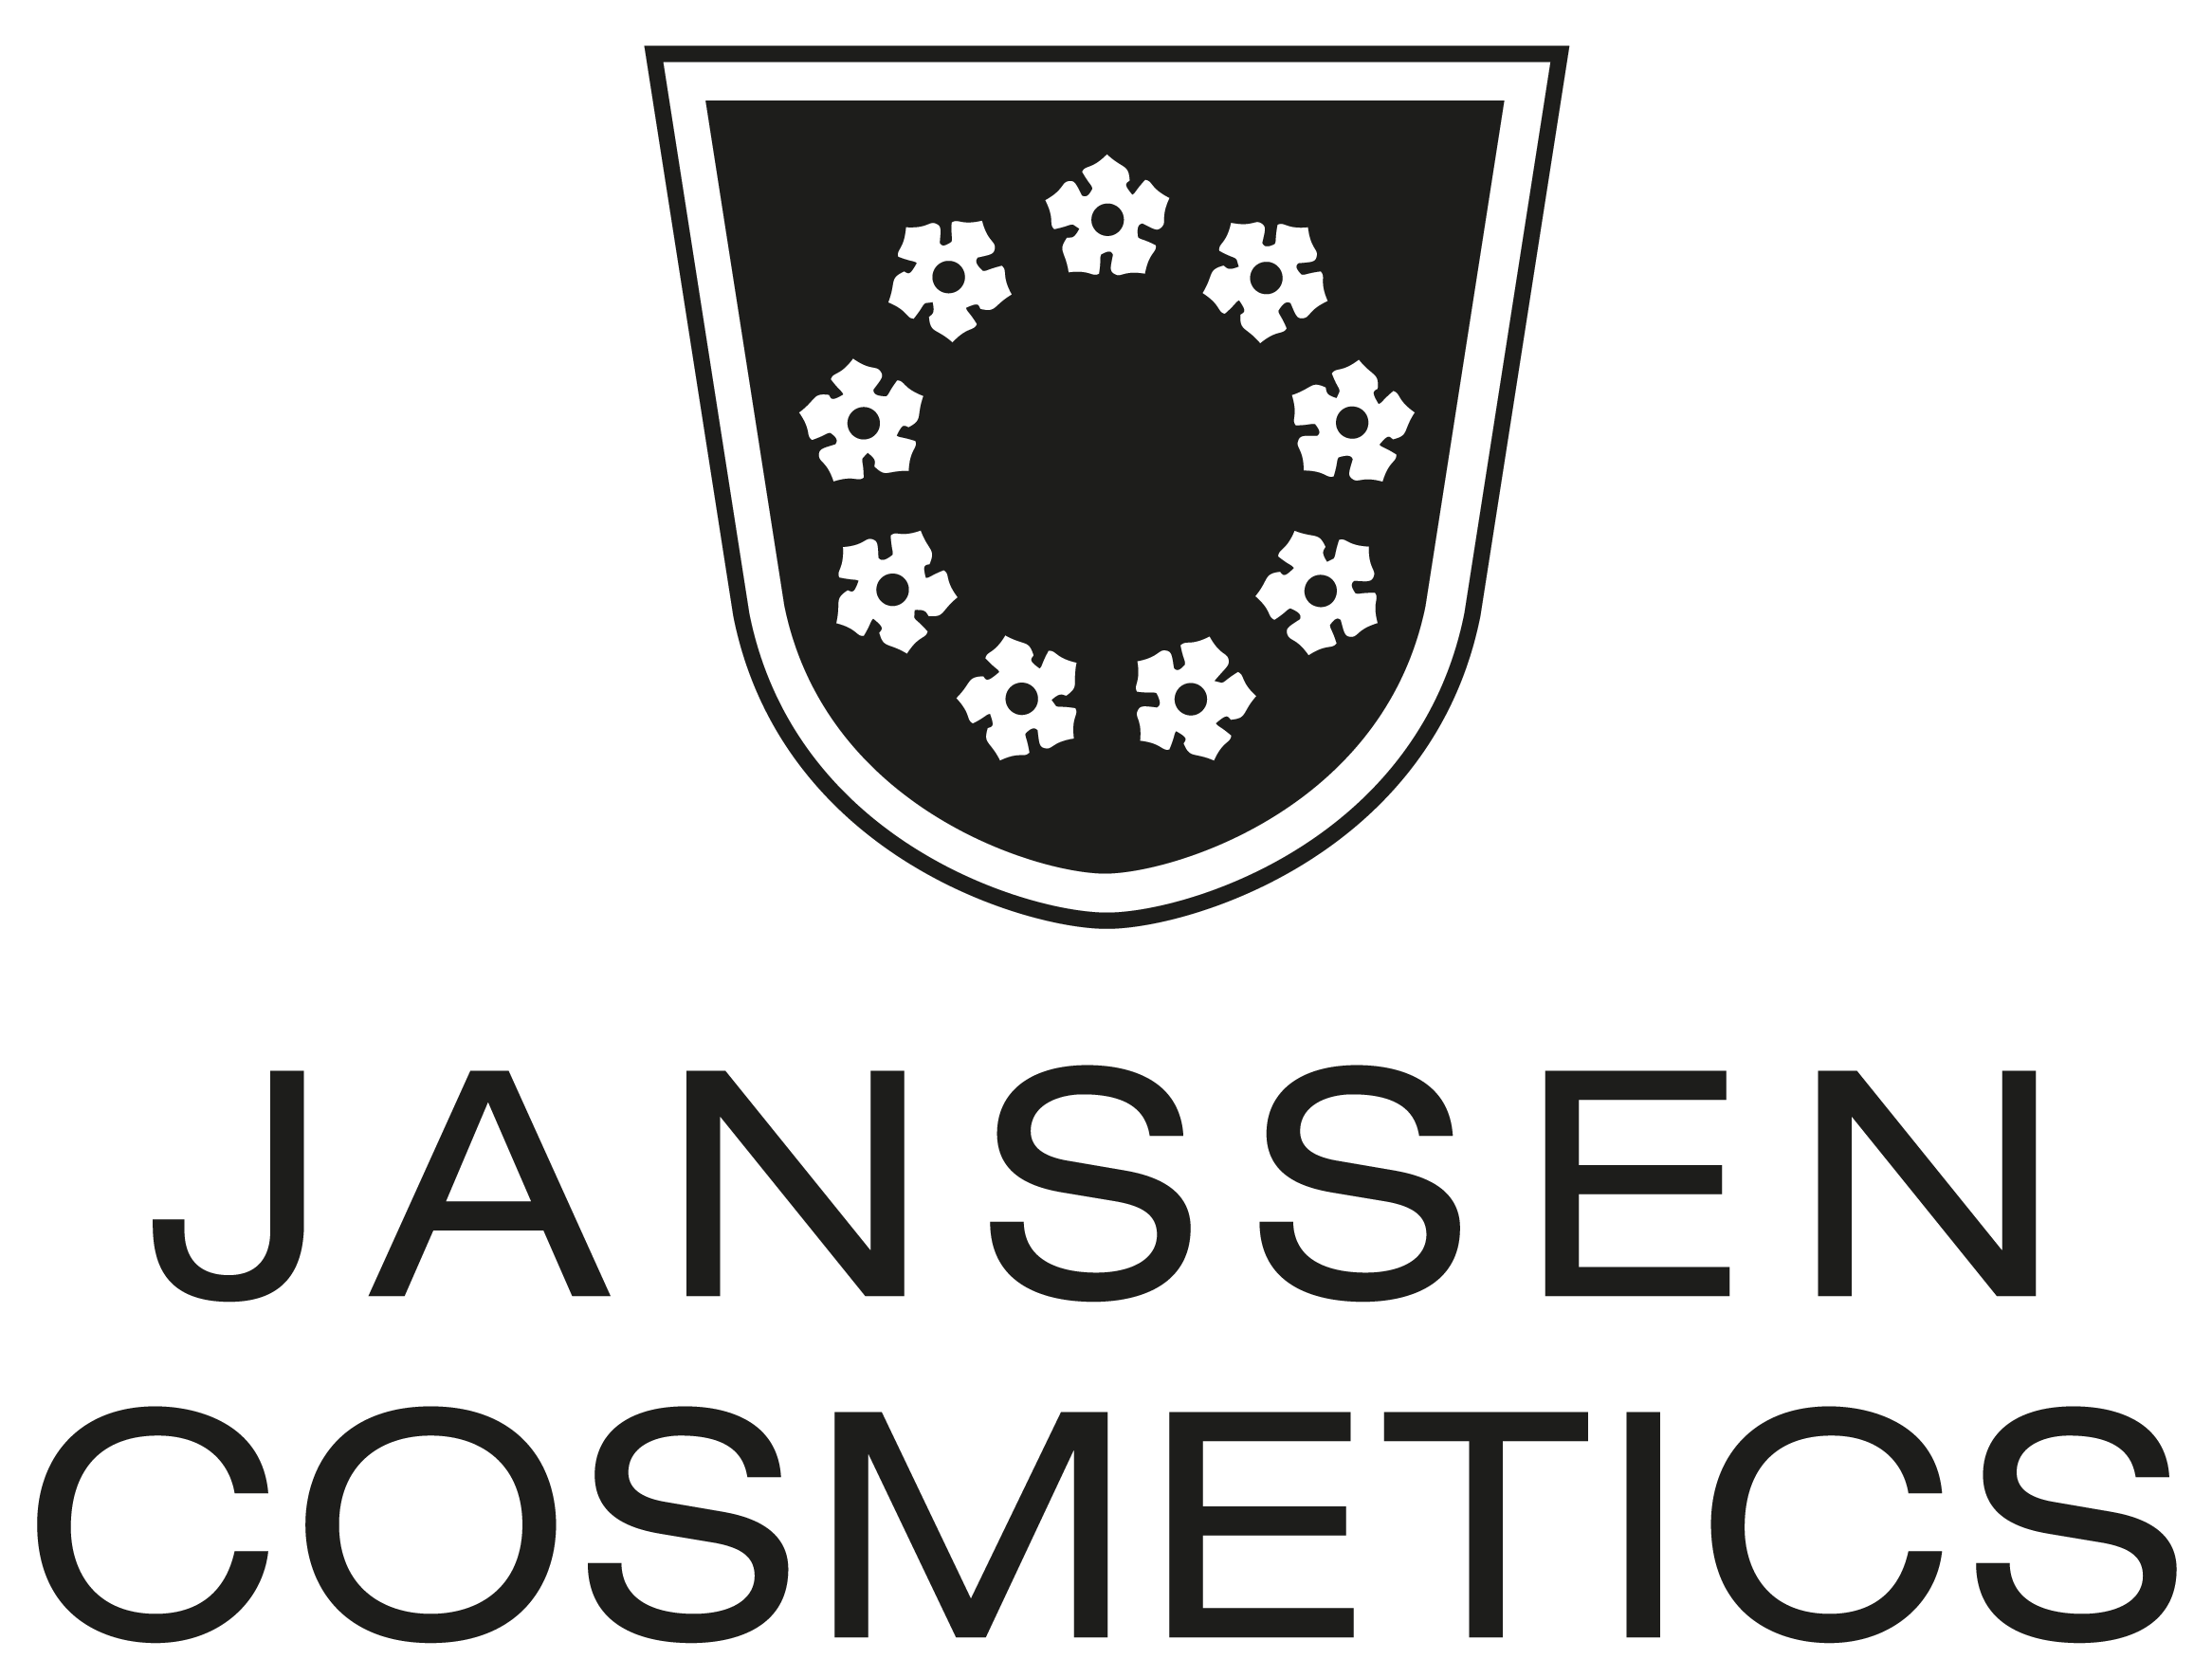 janssen cosmetics